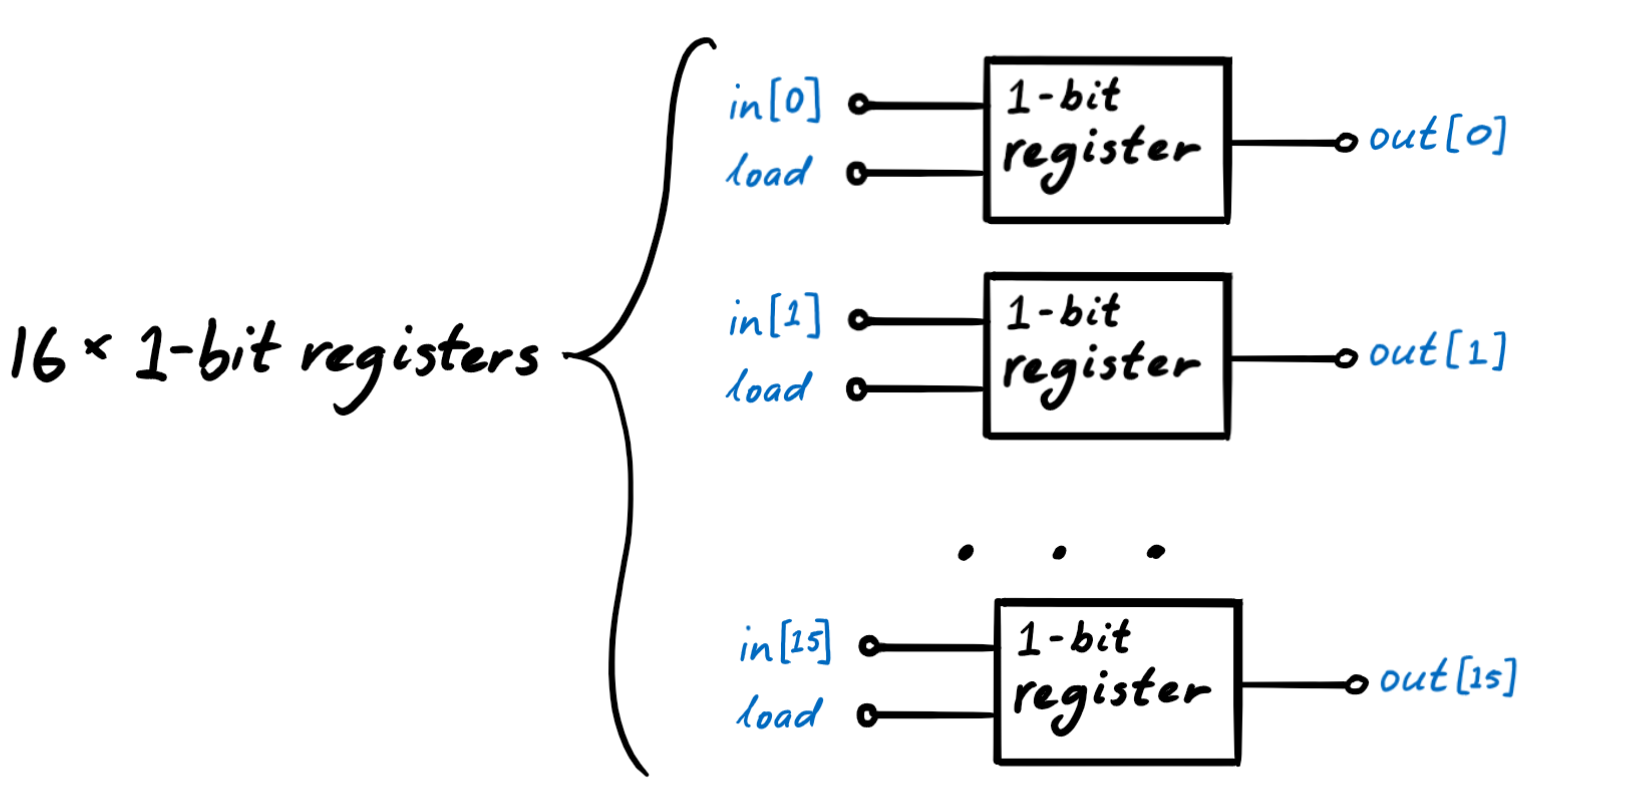 Sixteen 1-bit registers form a 16-bit register